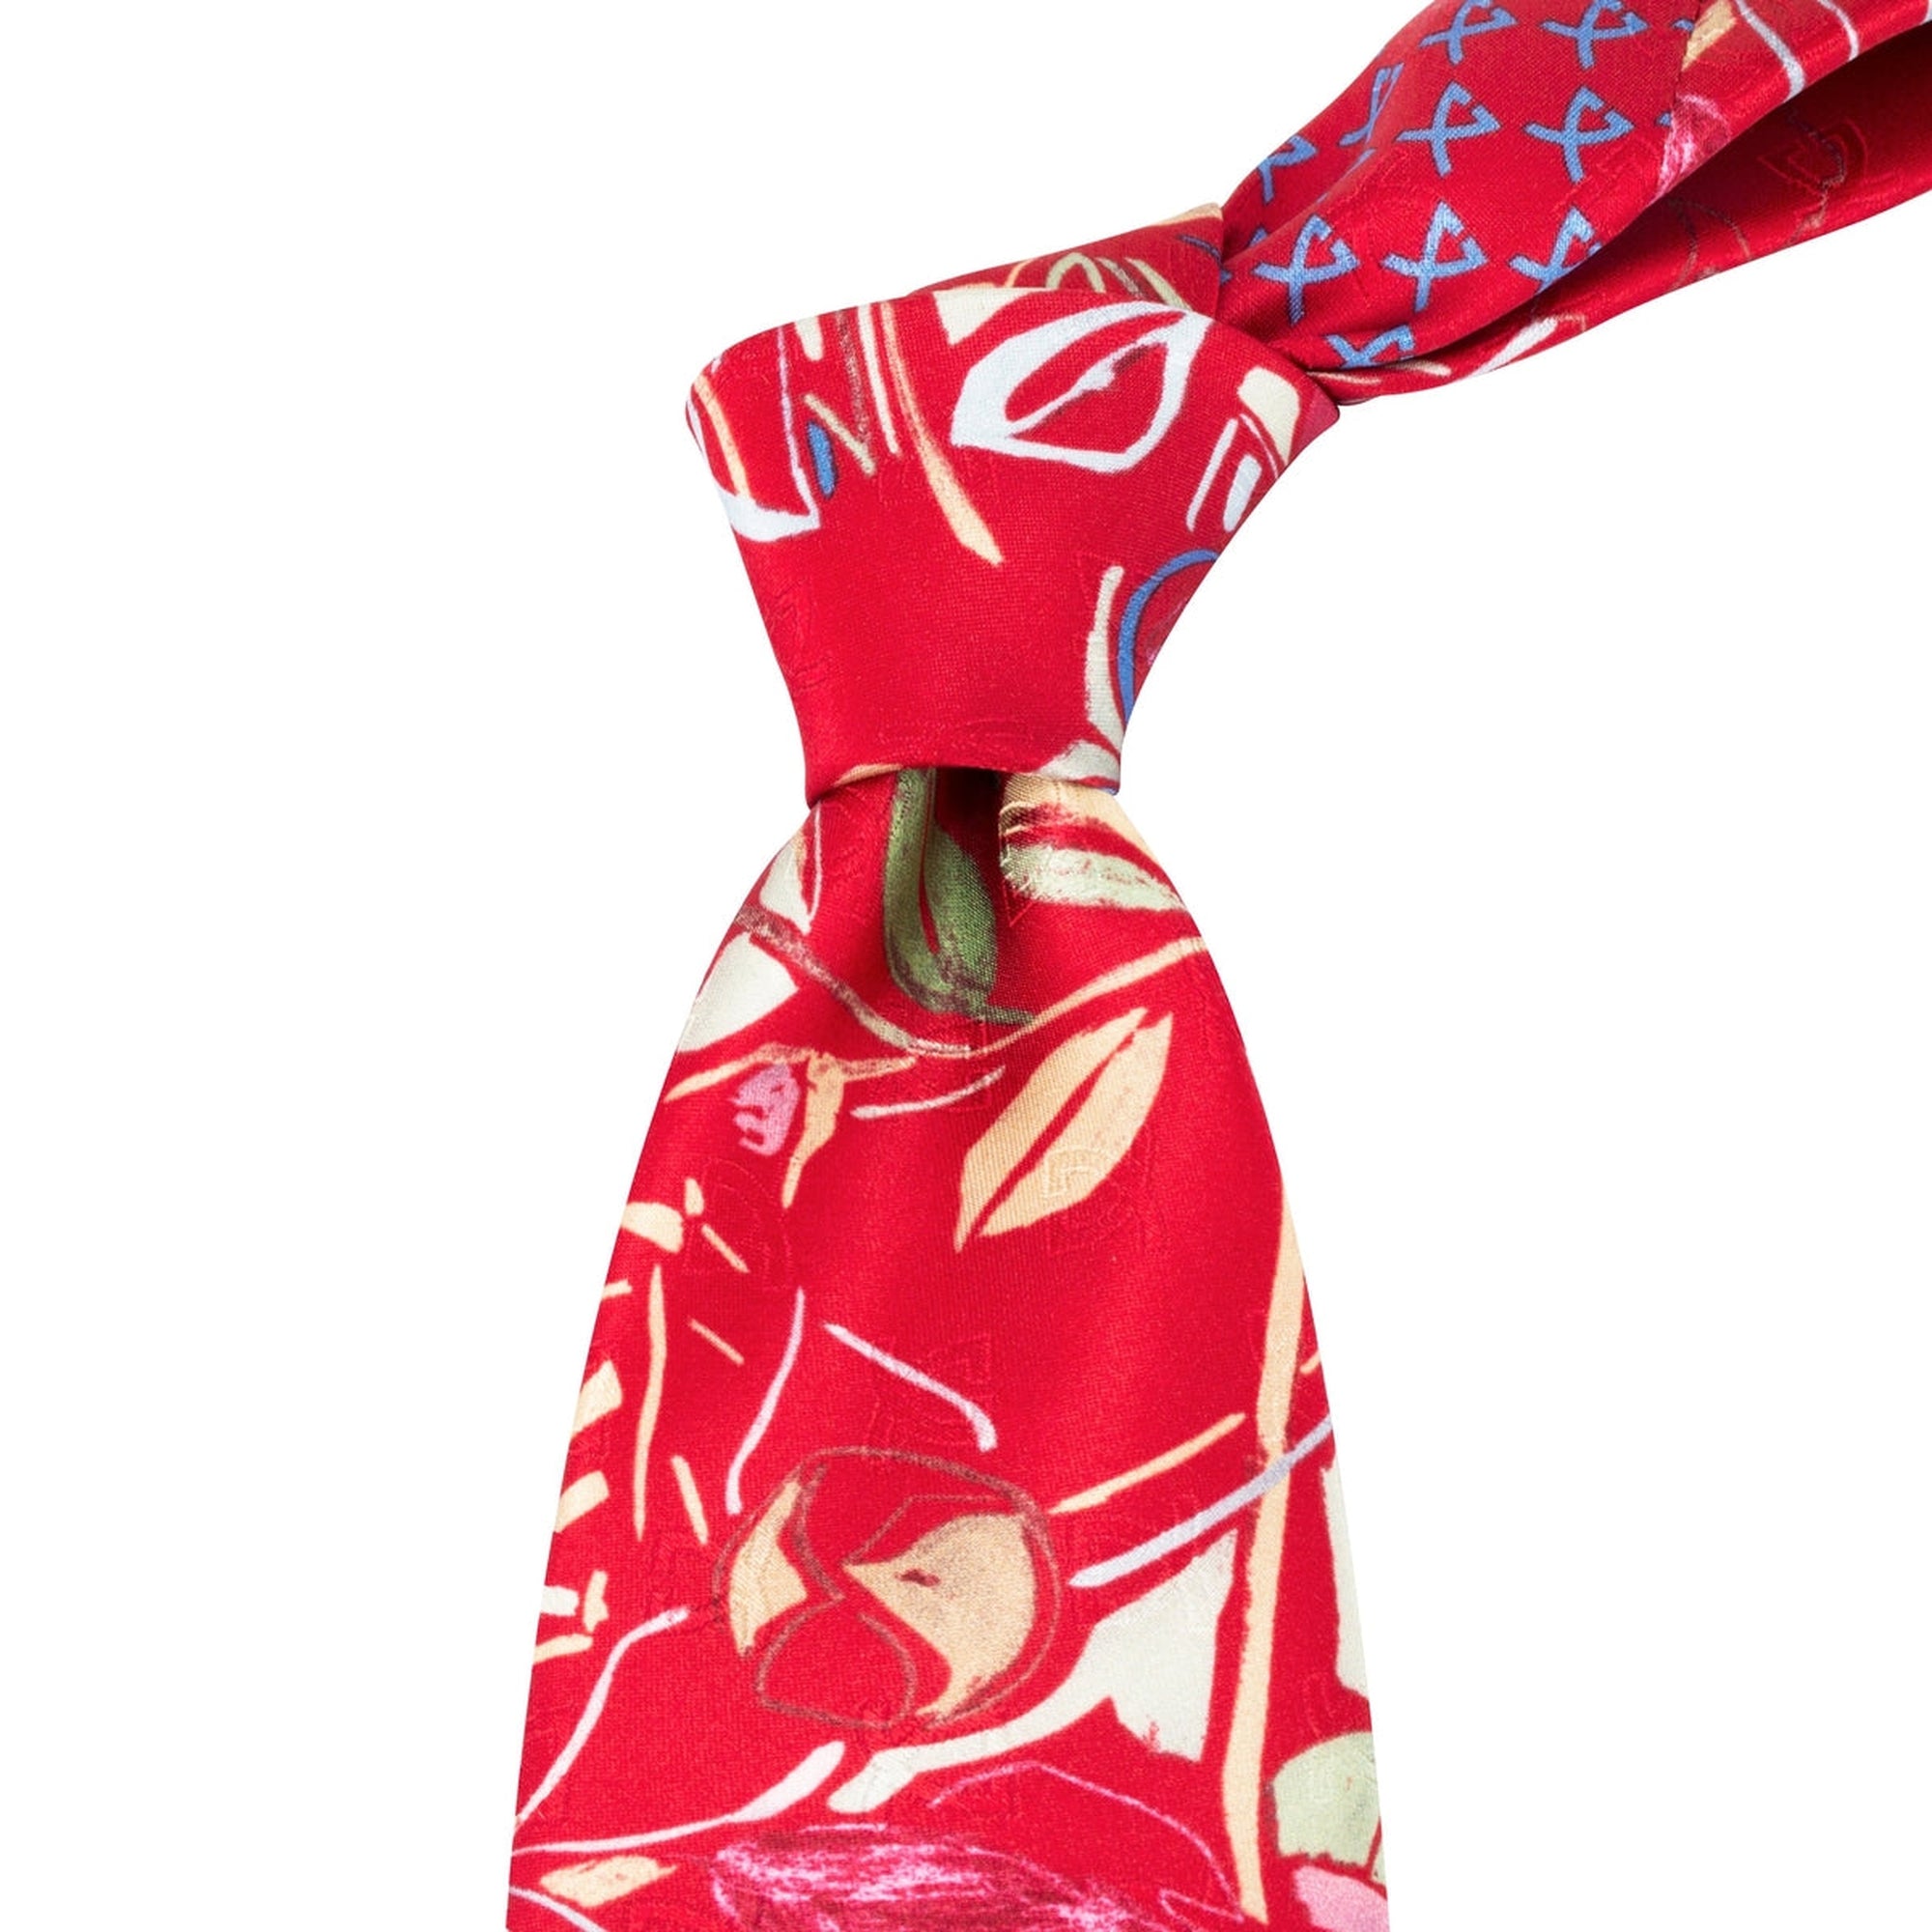 Leonard Scarlett Red Silk Satin Tie with Summer Orchid Prints-Cufflinks.com.sg | Neckties.com.sg